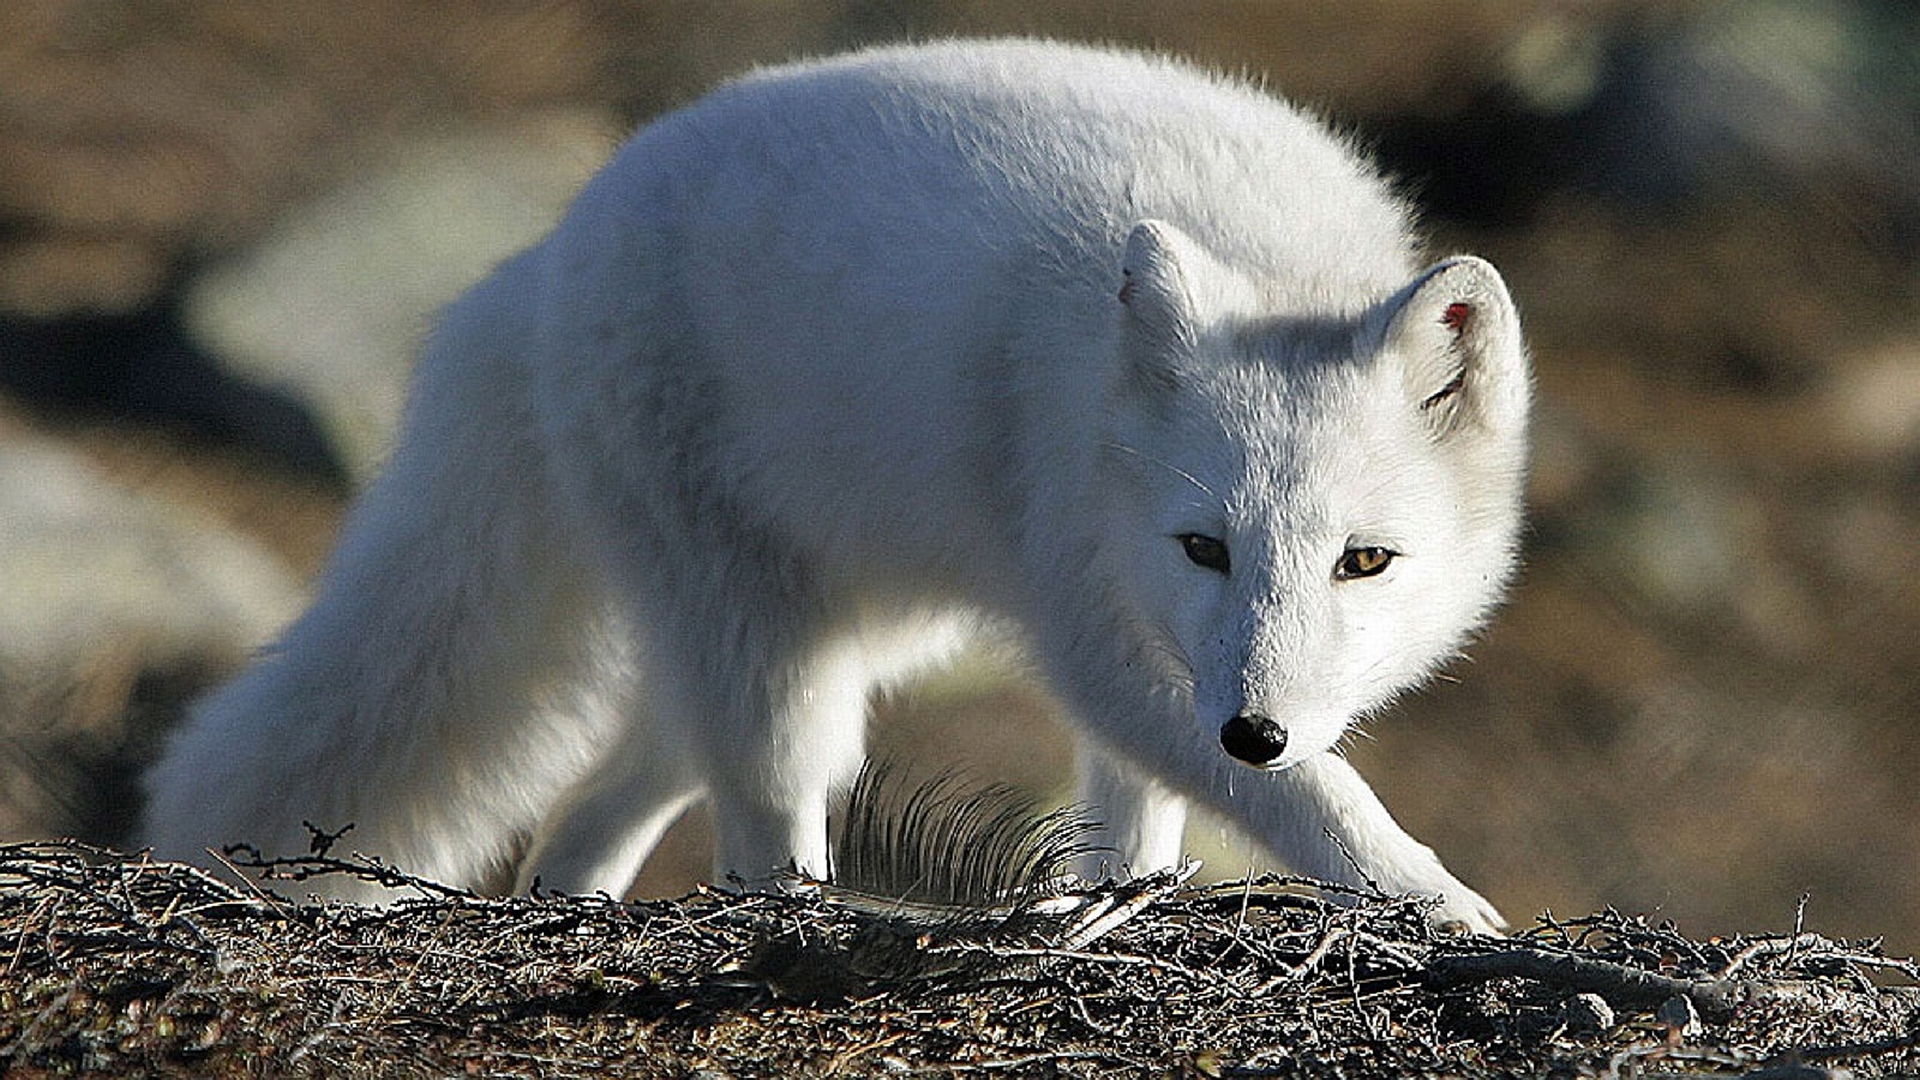 Arctic fox standing in snowy landscape with piercing gaze.